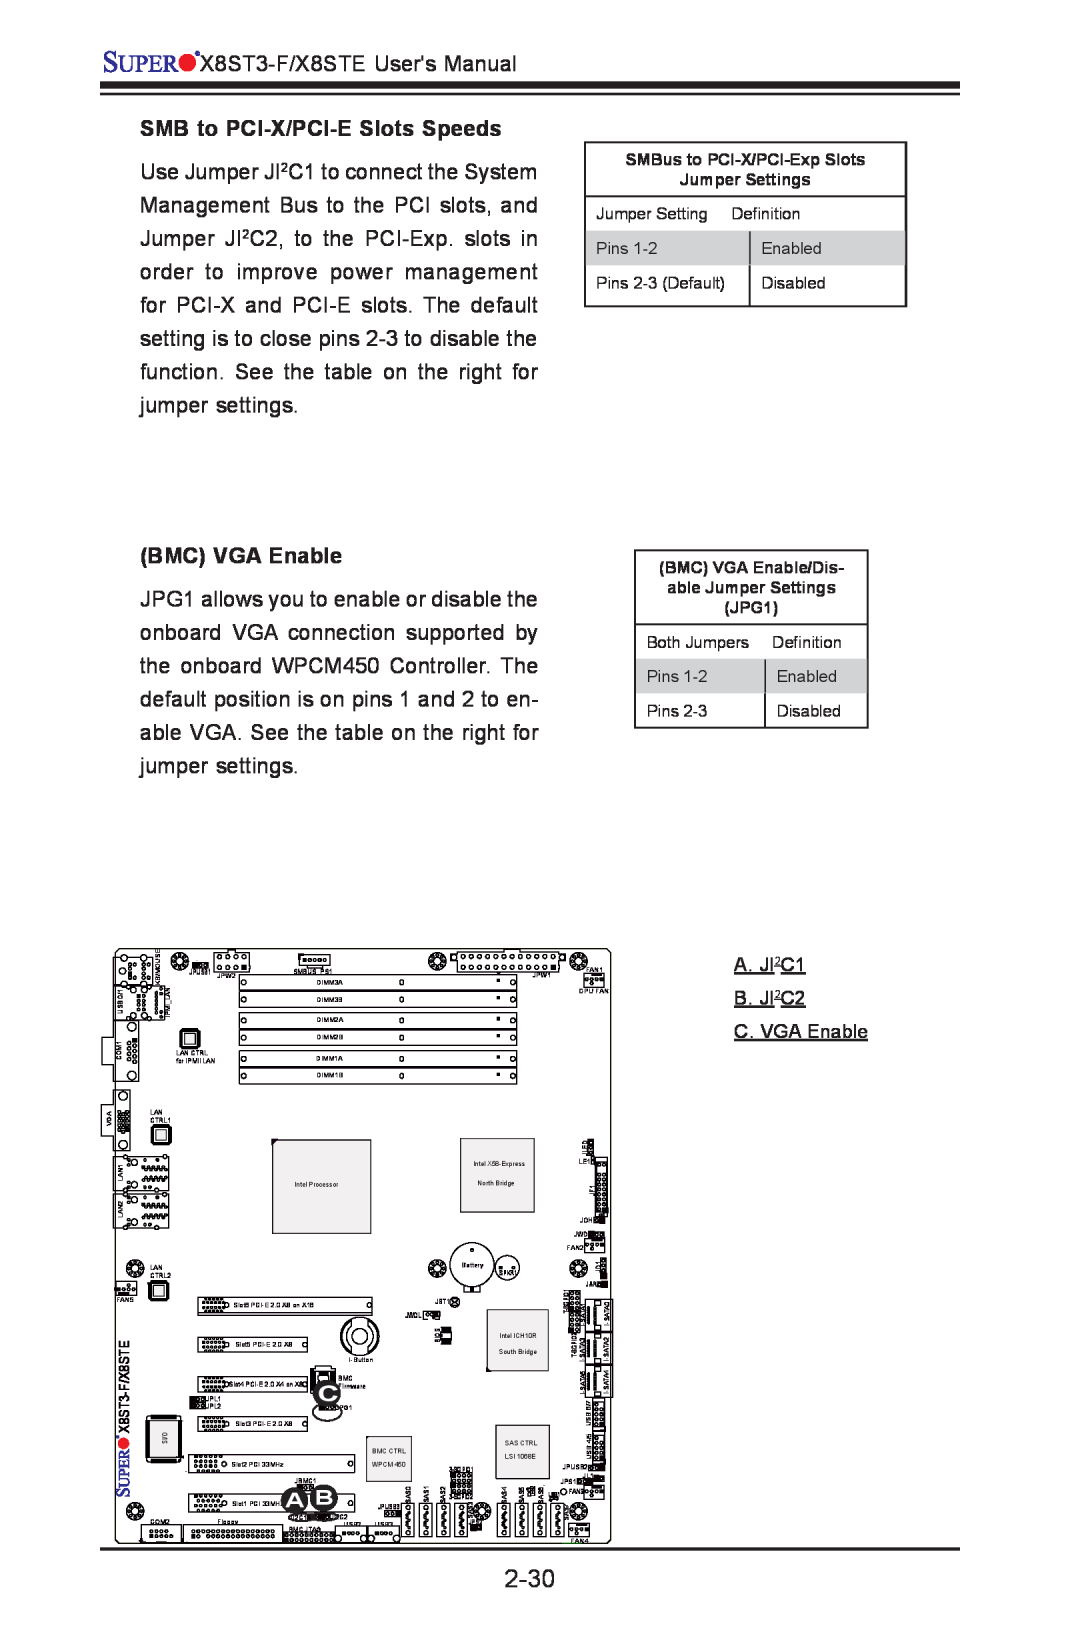 SUPER MICRO Computer X8ST3-F 2-30, SMB to PCI-X/PCI-E Slots Speeds, BMC VGA Enable, A. JI 2C1, B. JI 2C2, C. VGA Enable 